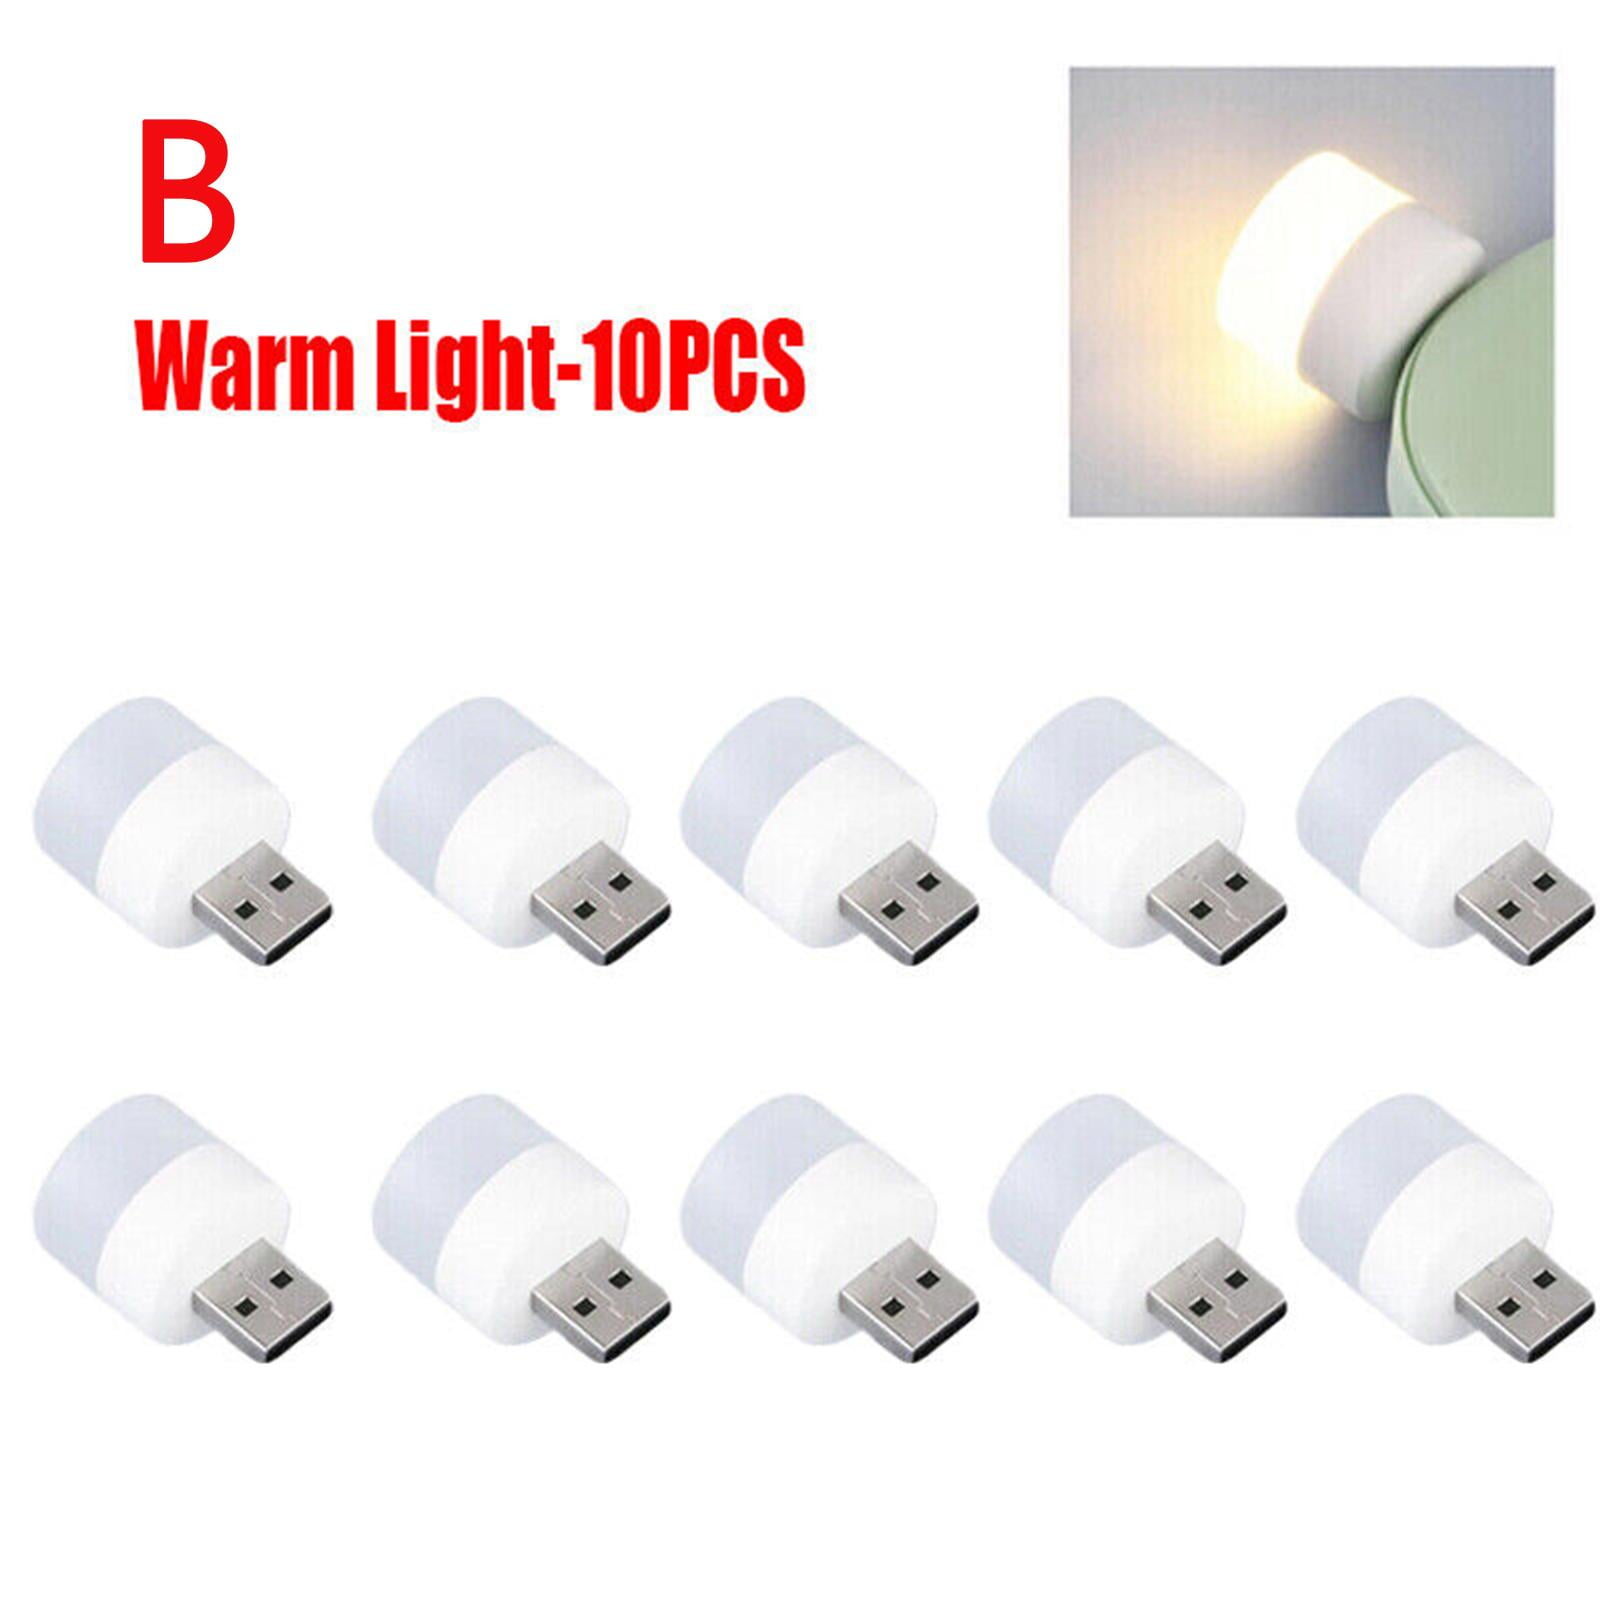 Buy portable lamps at →